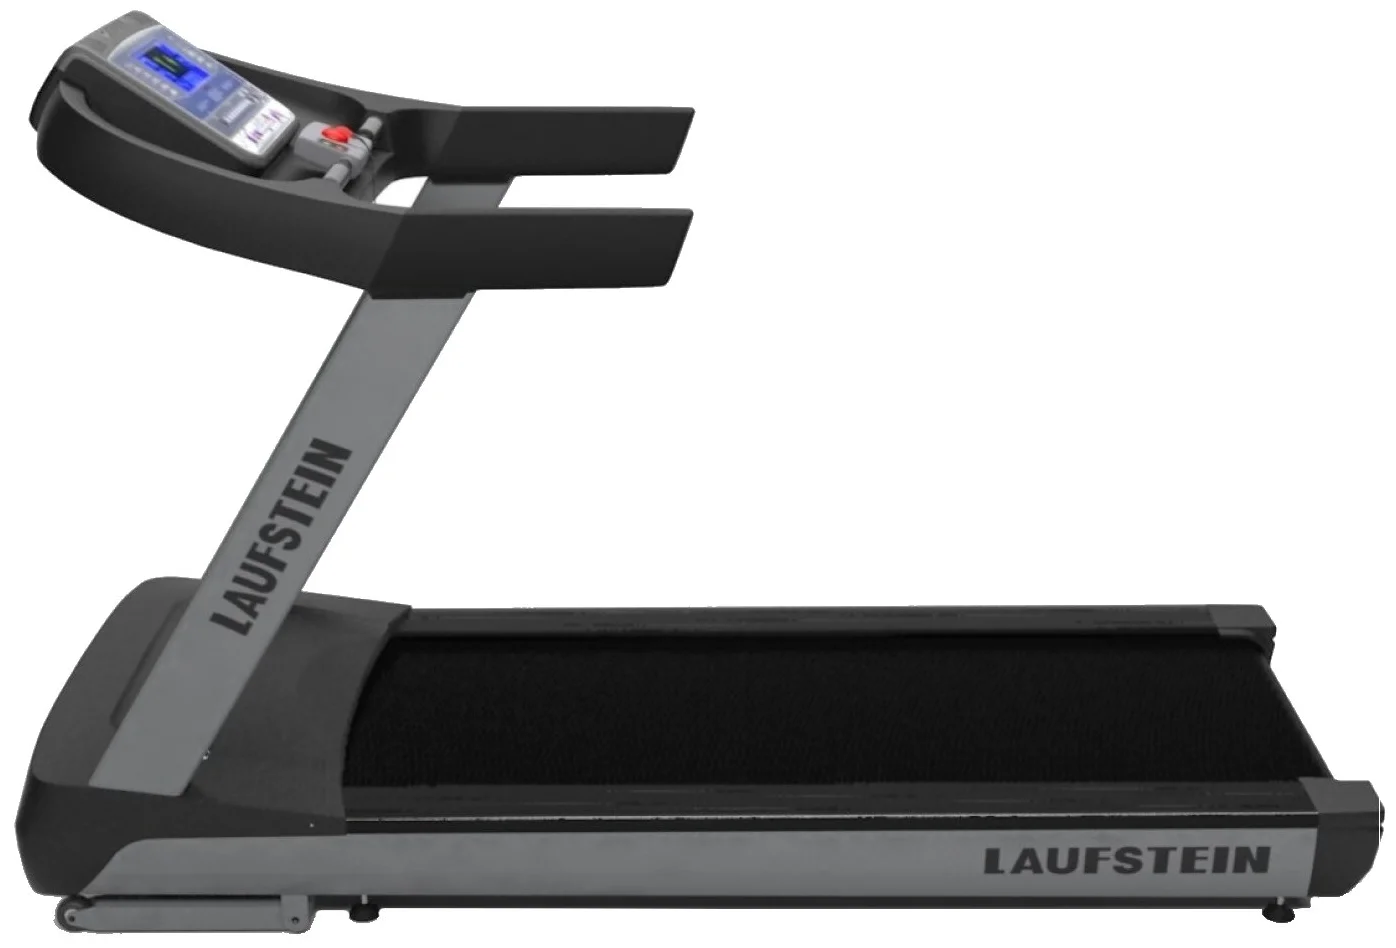 LAUFSTEIN Commercial - вес пользователя до 200 кг